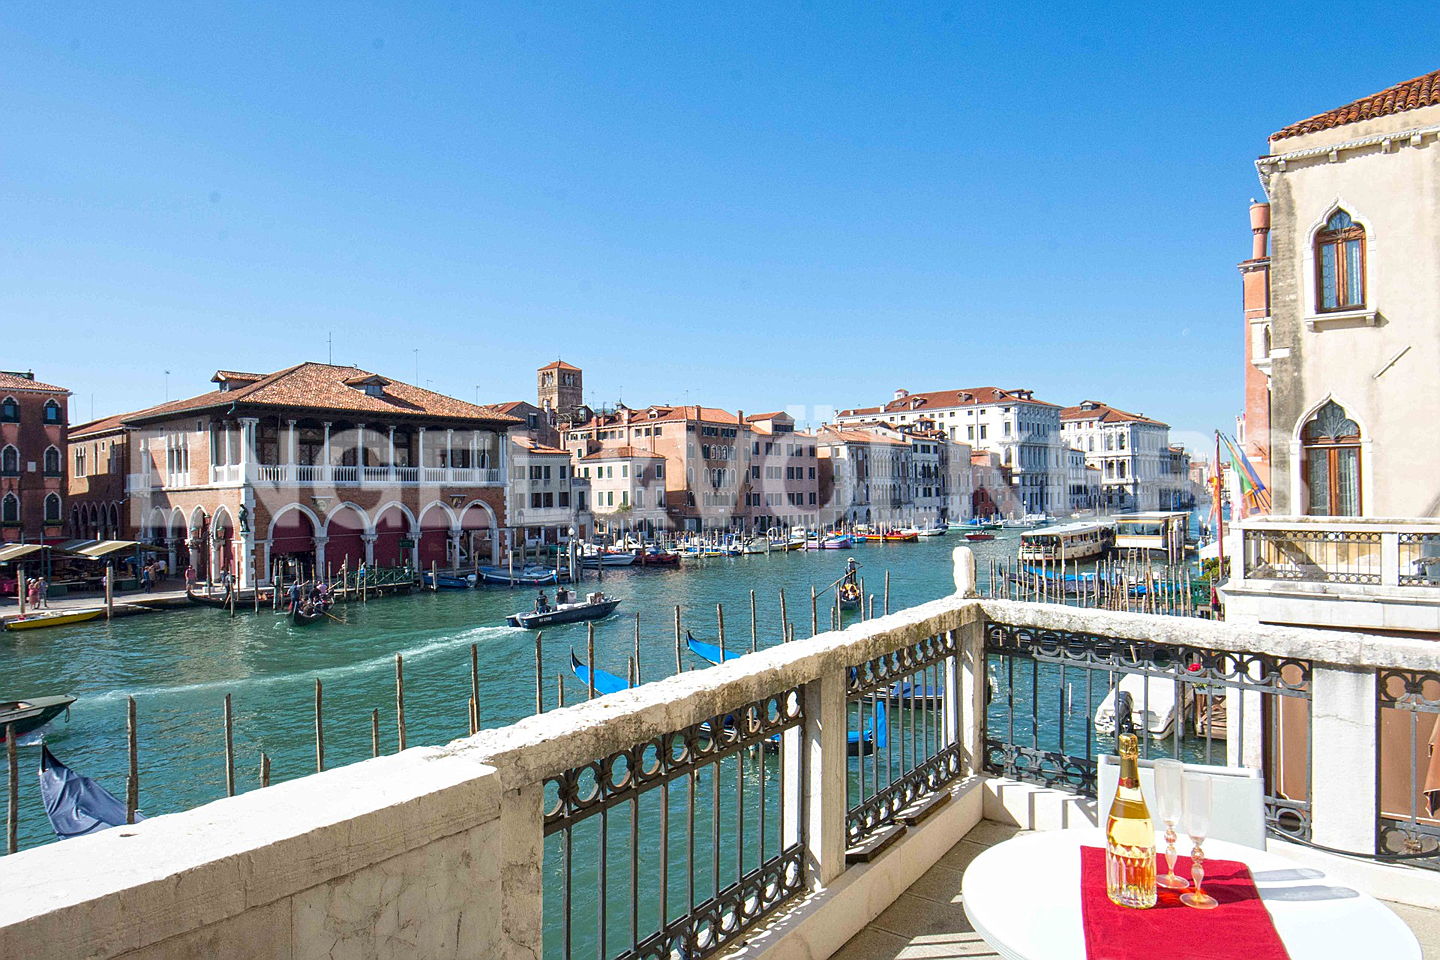  Venedig
- terrazza-sul-canal-grande.jpg